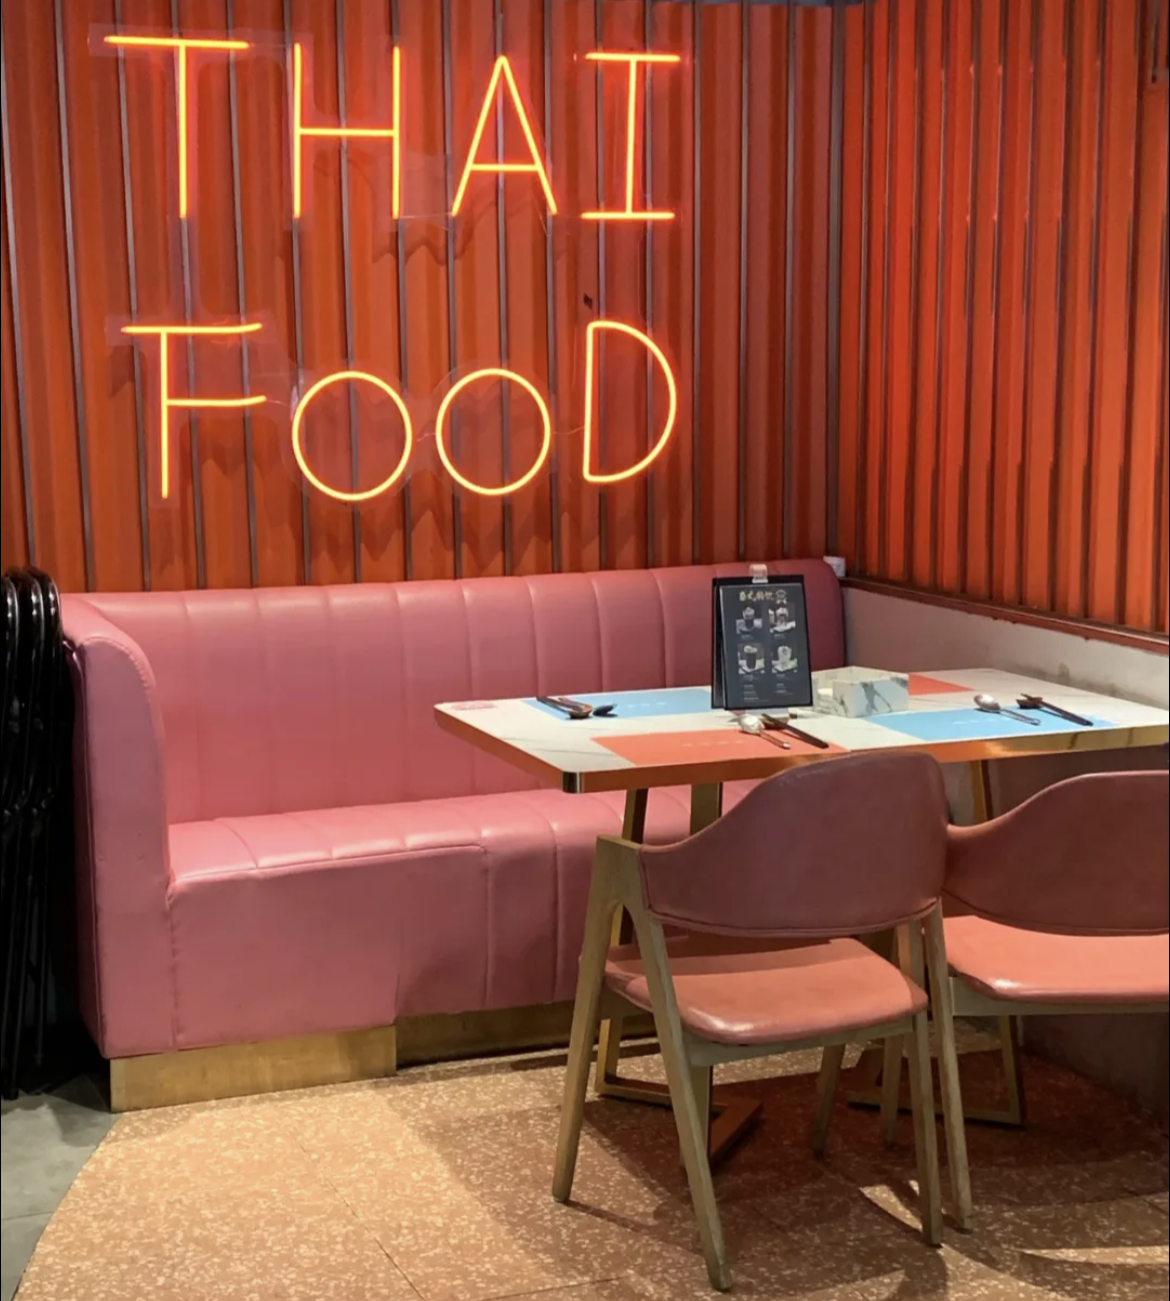 SHOW CASE | Orange neon signs for THAI FOOD restaurant store